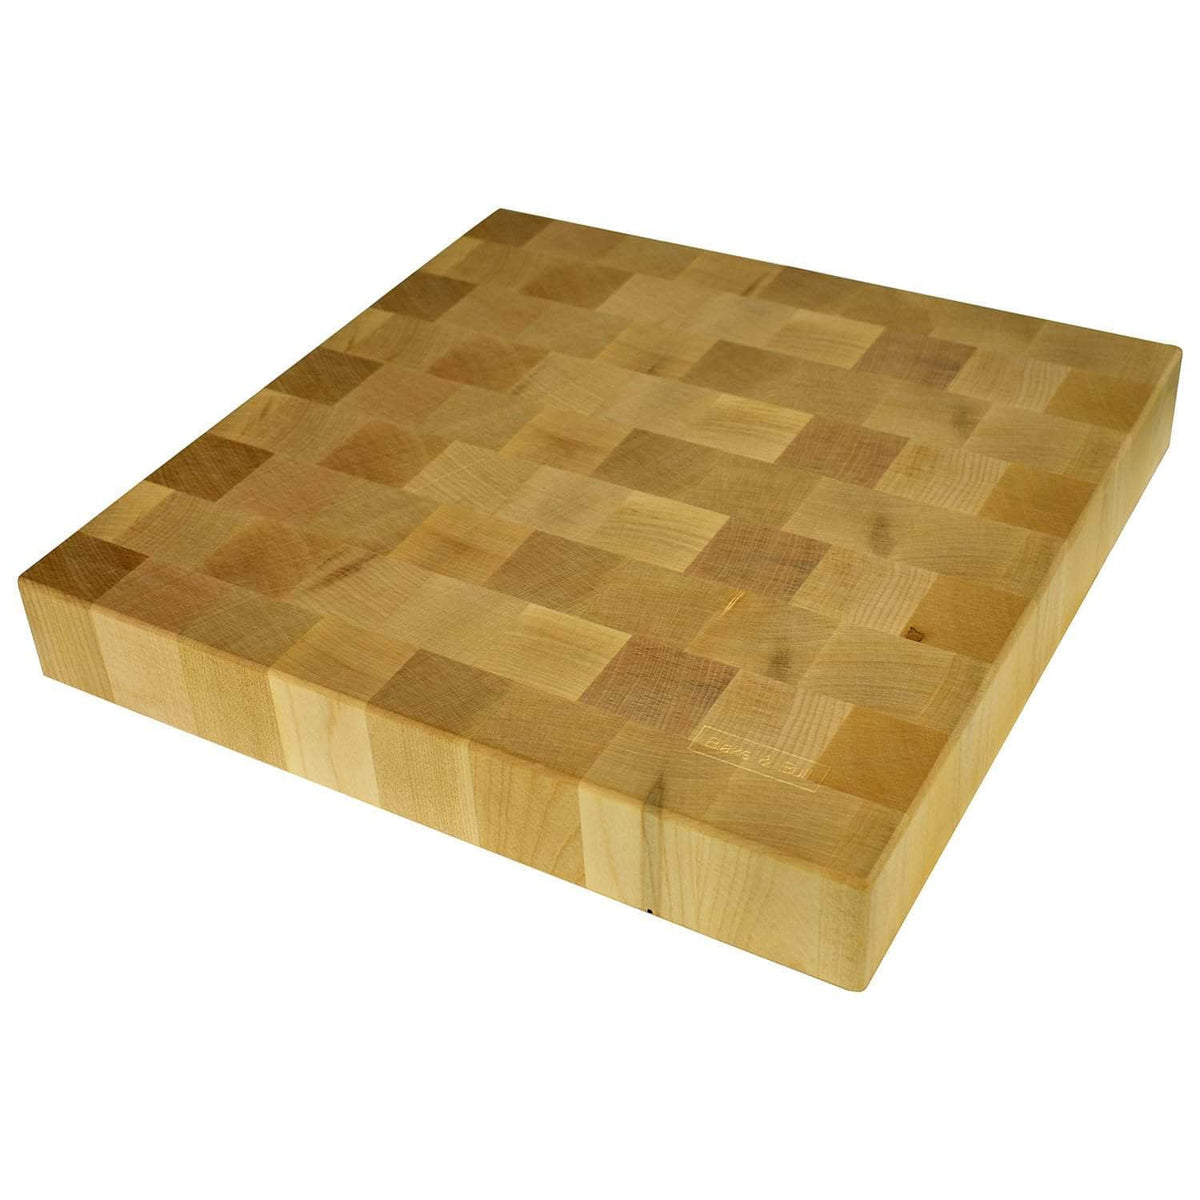 *NEW* Maple end grain professional hardwood chopping board